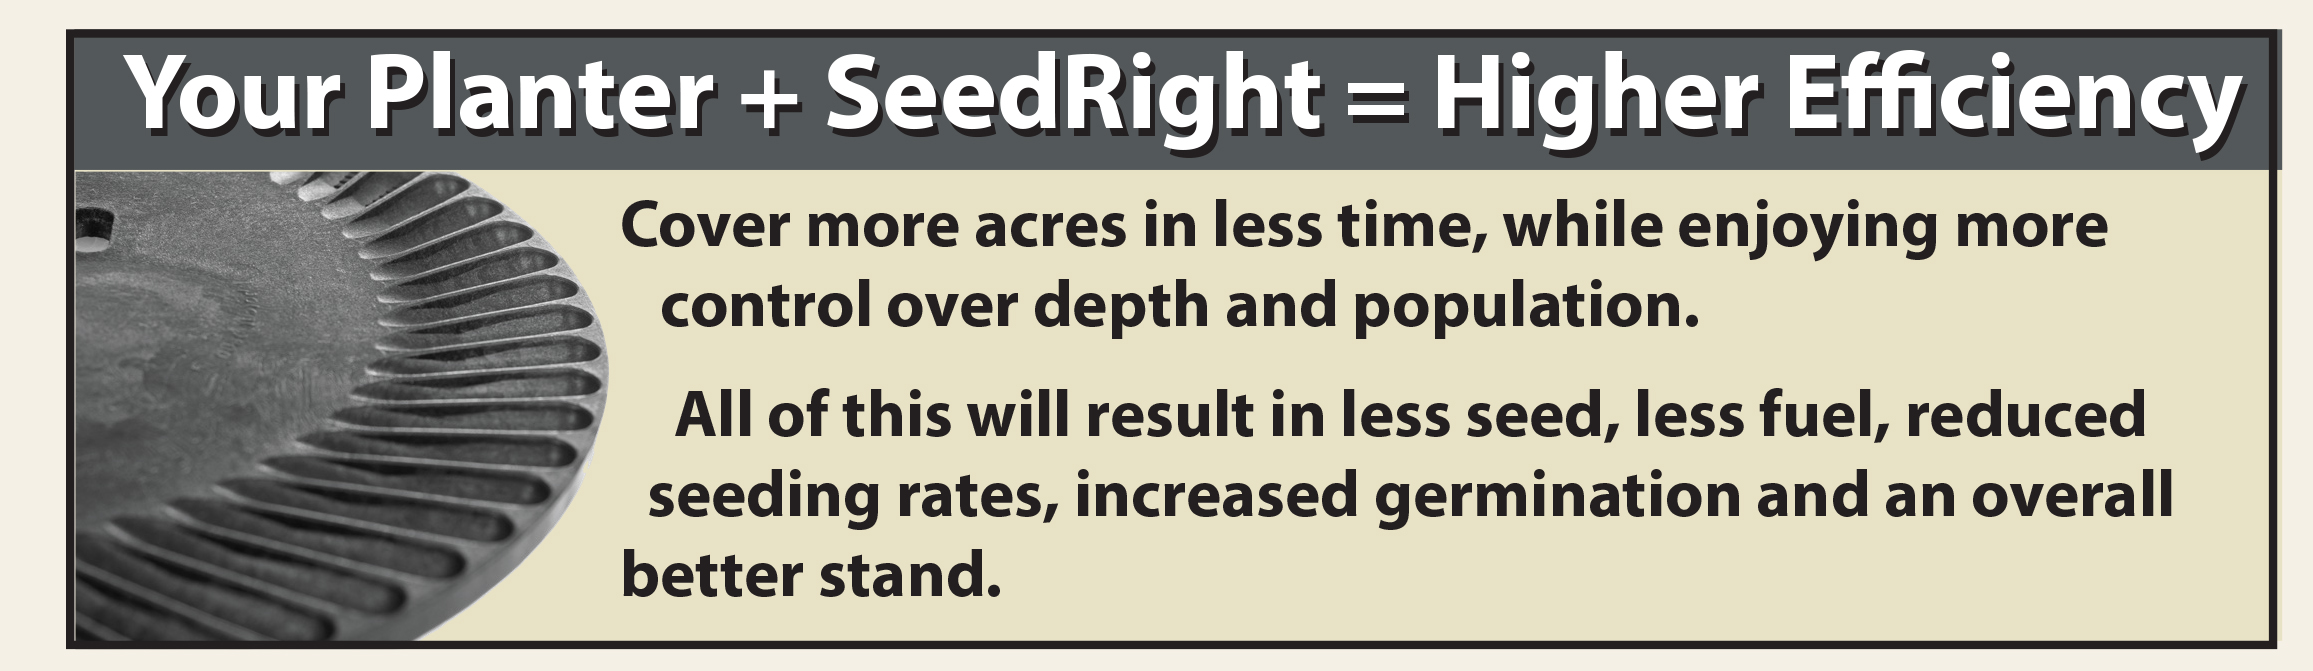 SeedRight-Seed-Plates-Higher-Efficiency